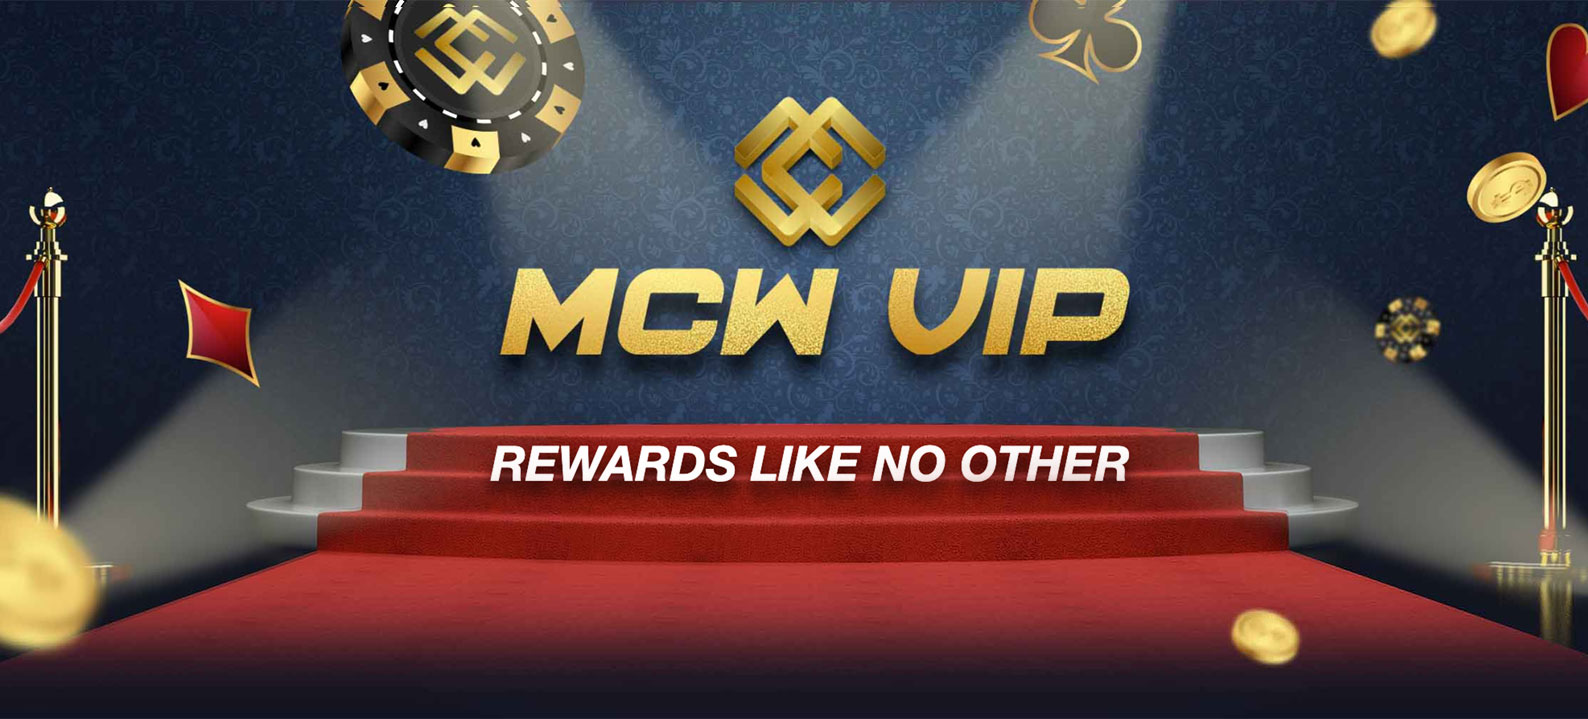 Online Casino in Philippines MCW Philippines